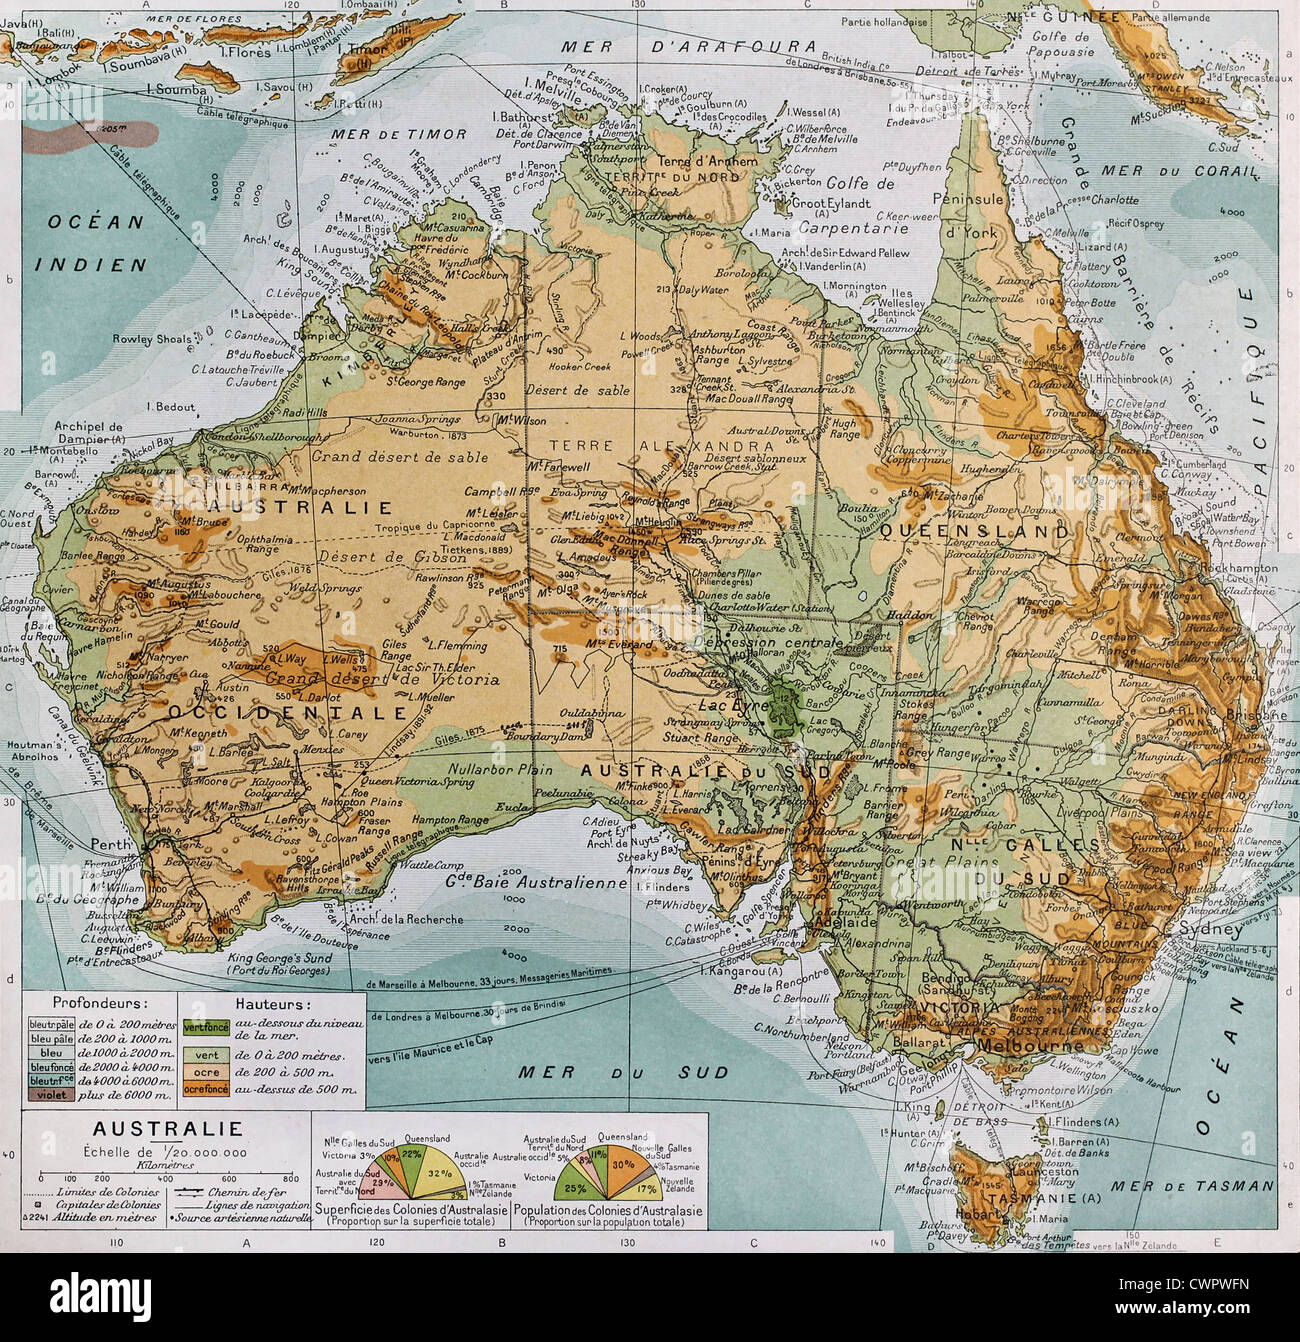 Australia physical map Stock Photo